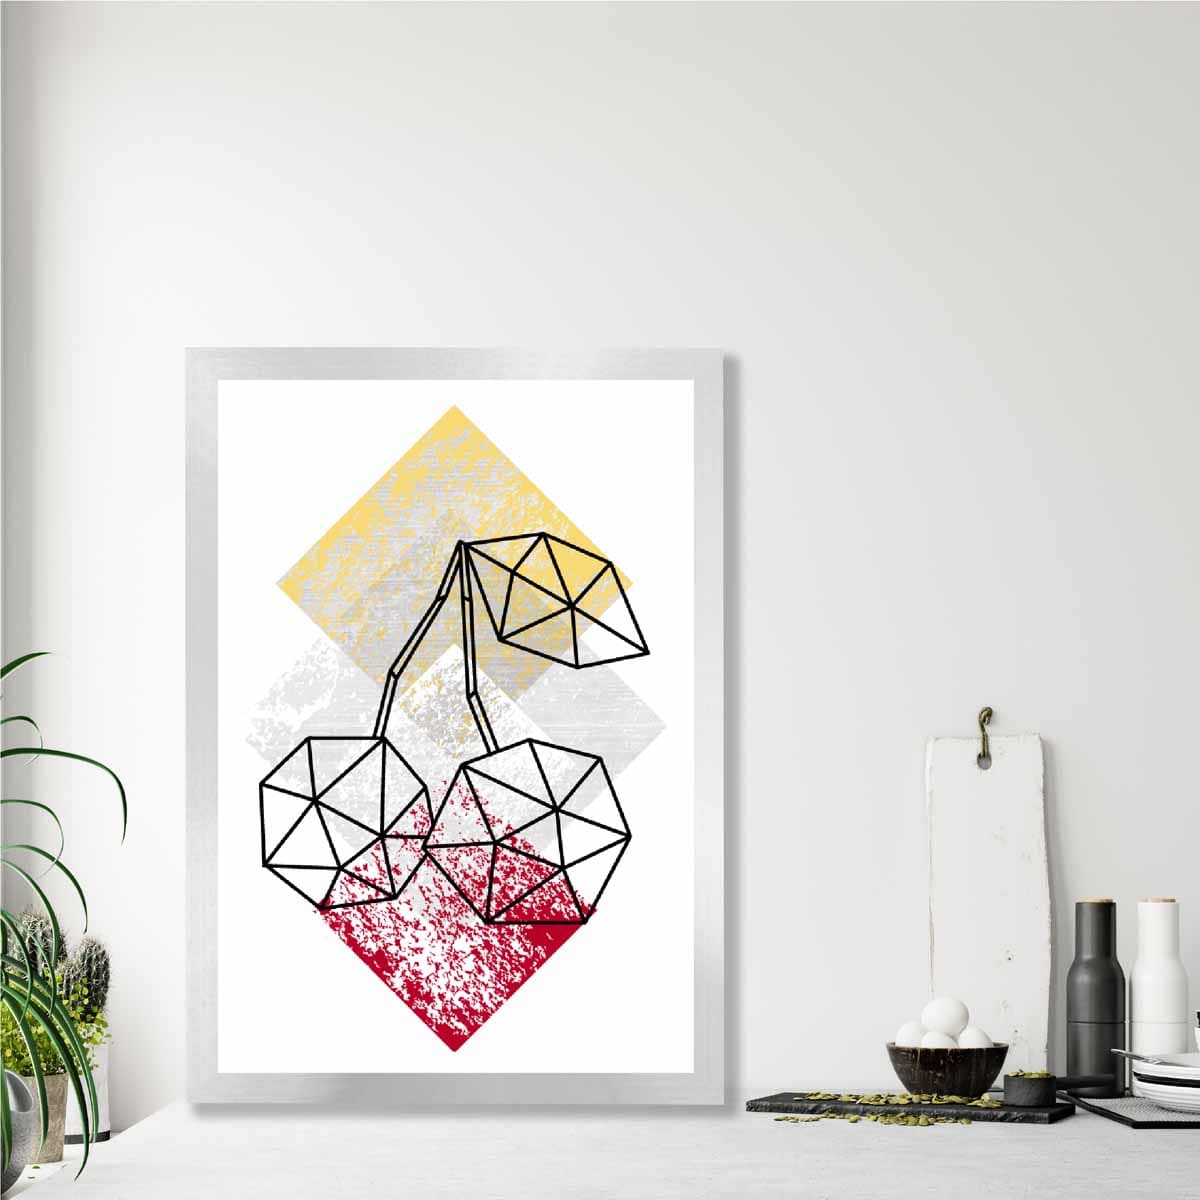 Geometric Fruit Line art Poster of Cherries Textured Yellow Grey Red